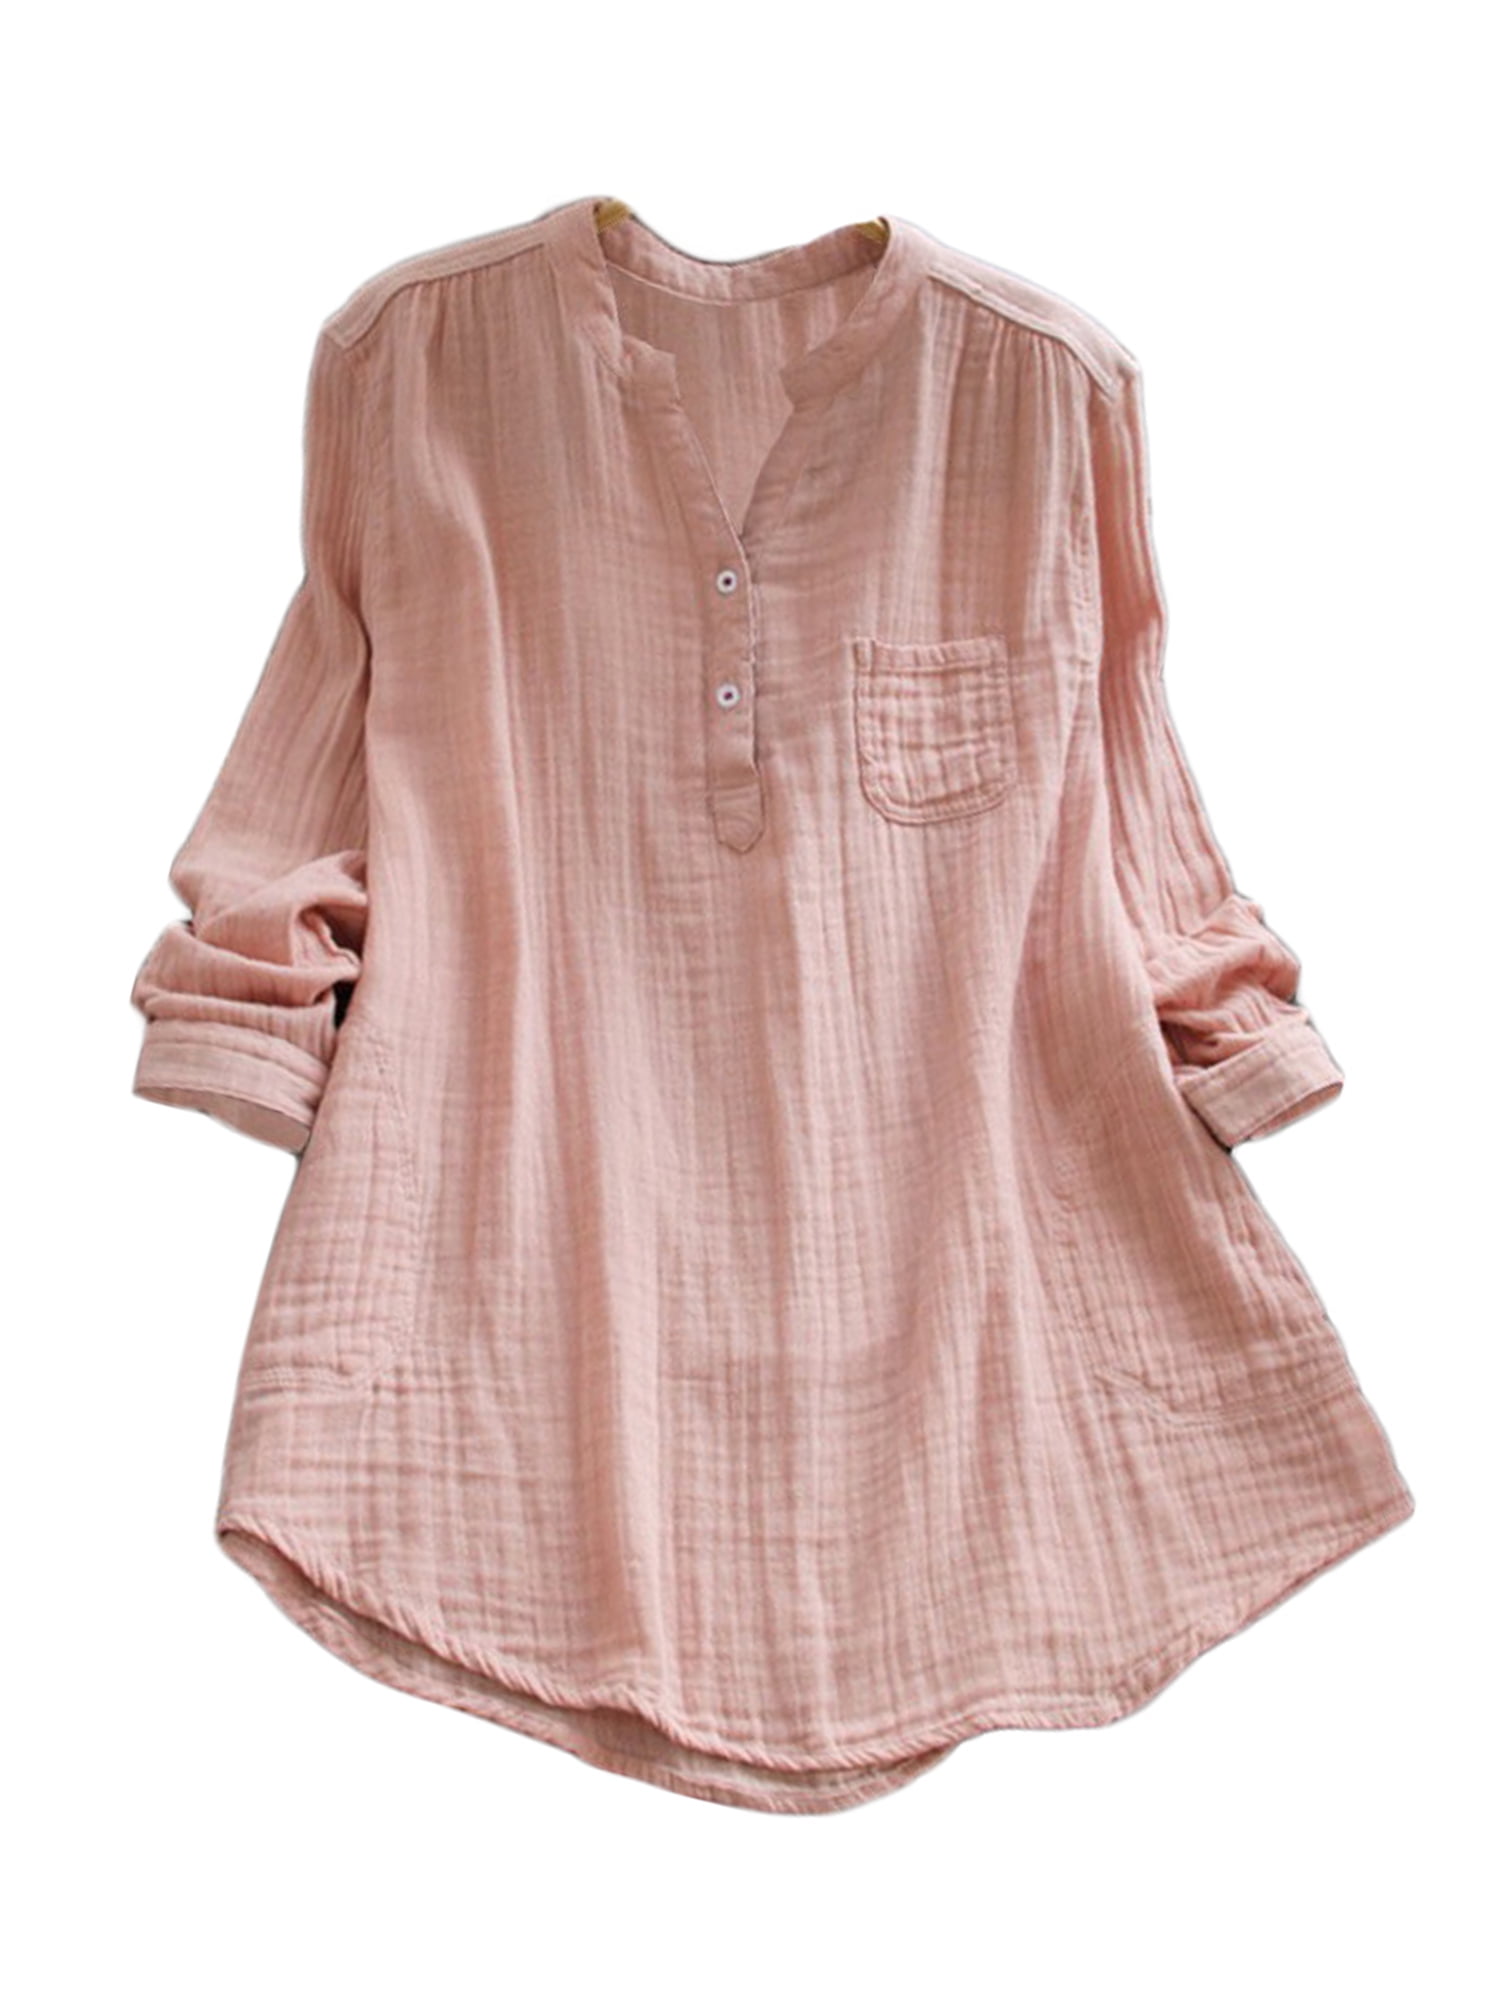 Plus Size Women Cotton Linen Long Sleeve Button Down T-Shirt Casual Blouse Tops 